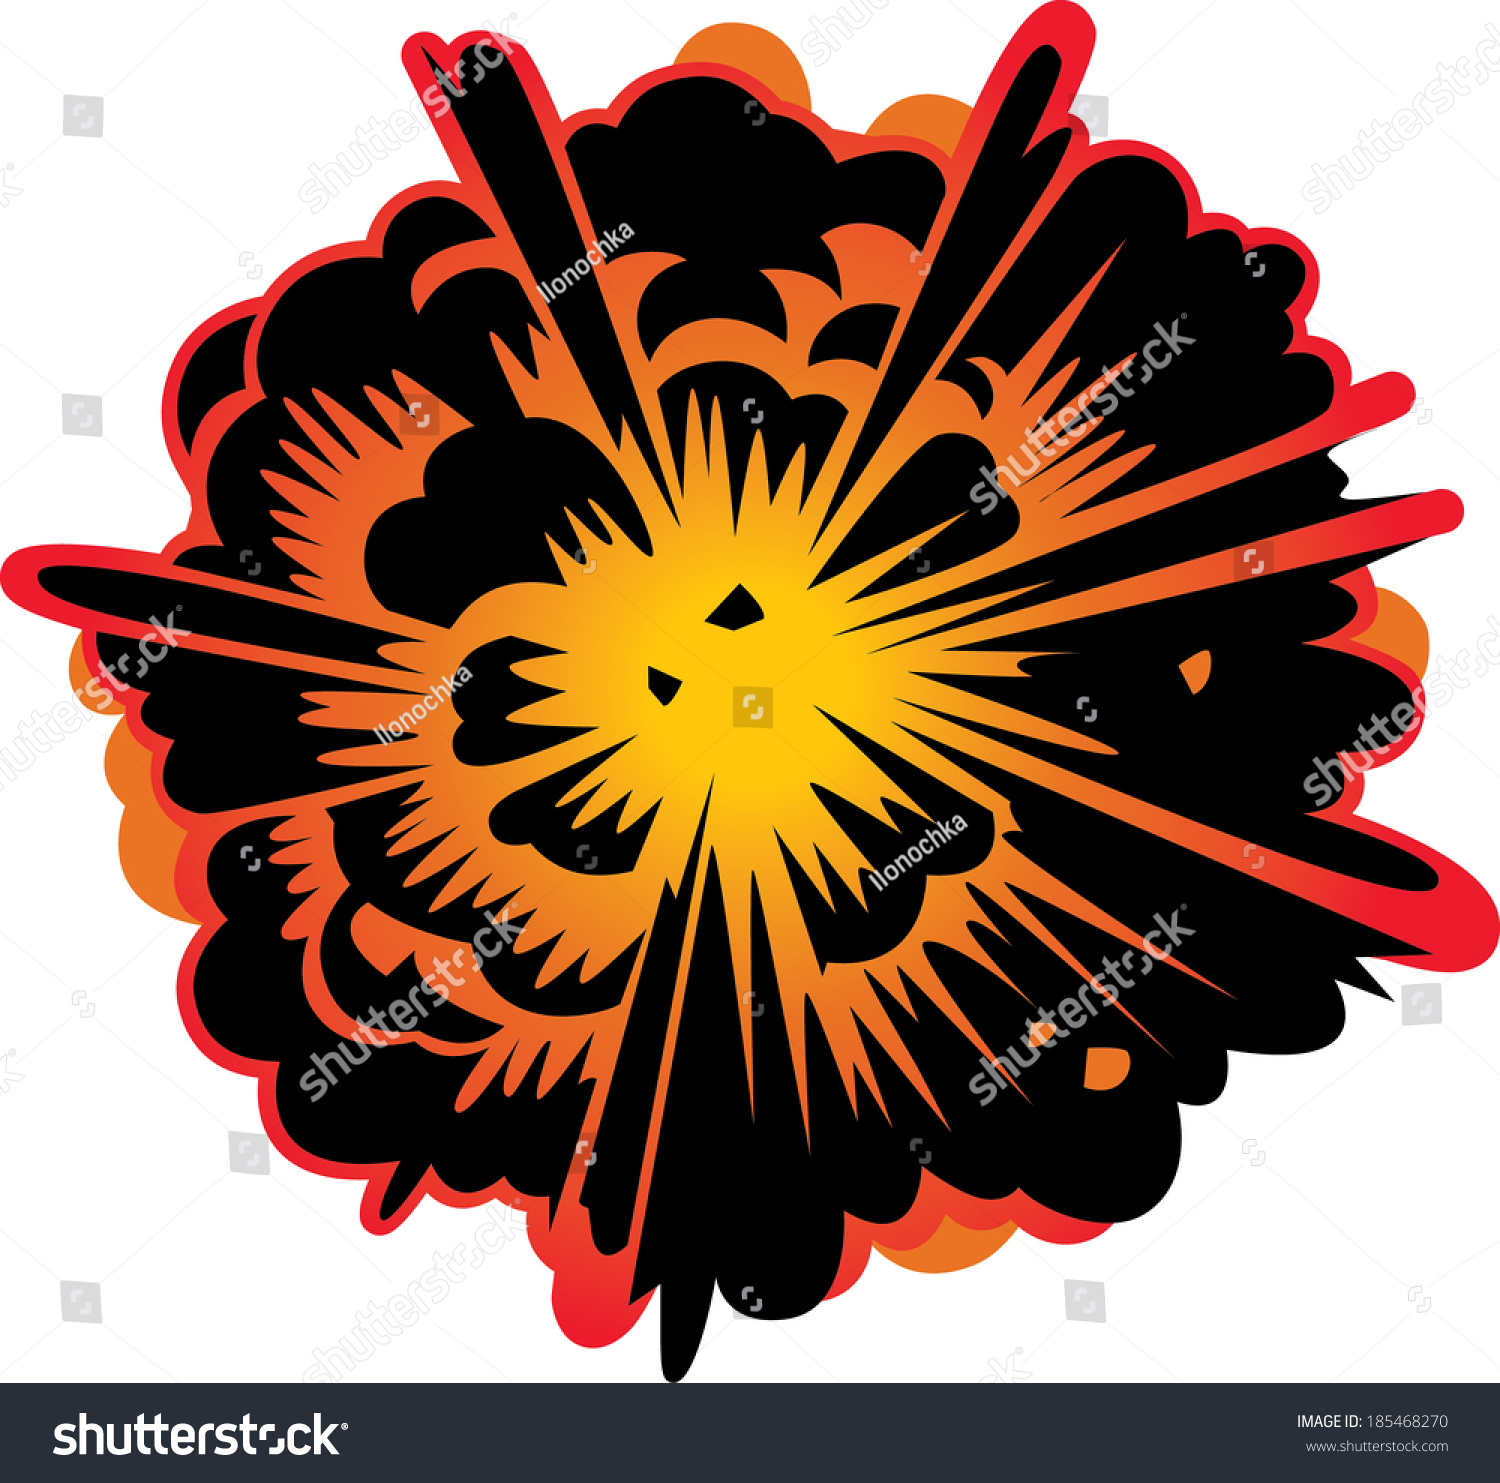 Comic Book Explosion Illustration - 185468270 : Shutterstock